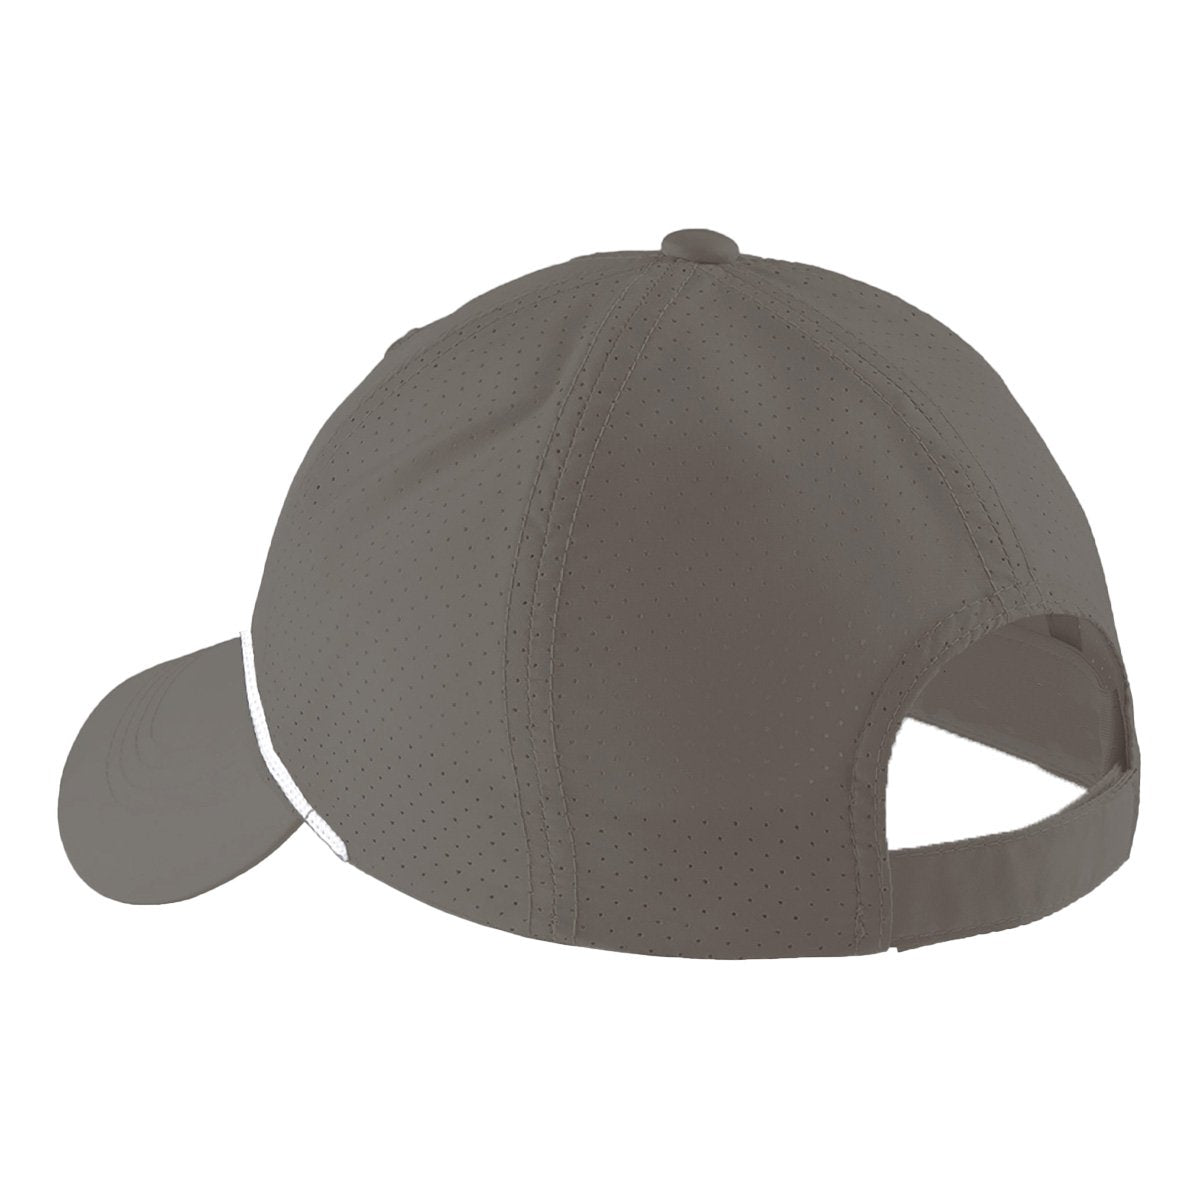 Popeye Golf Rope Patch Logo Lightweight Mesh Crushable Adjustable Strapback Hat